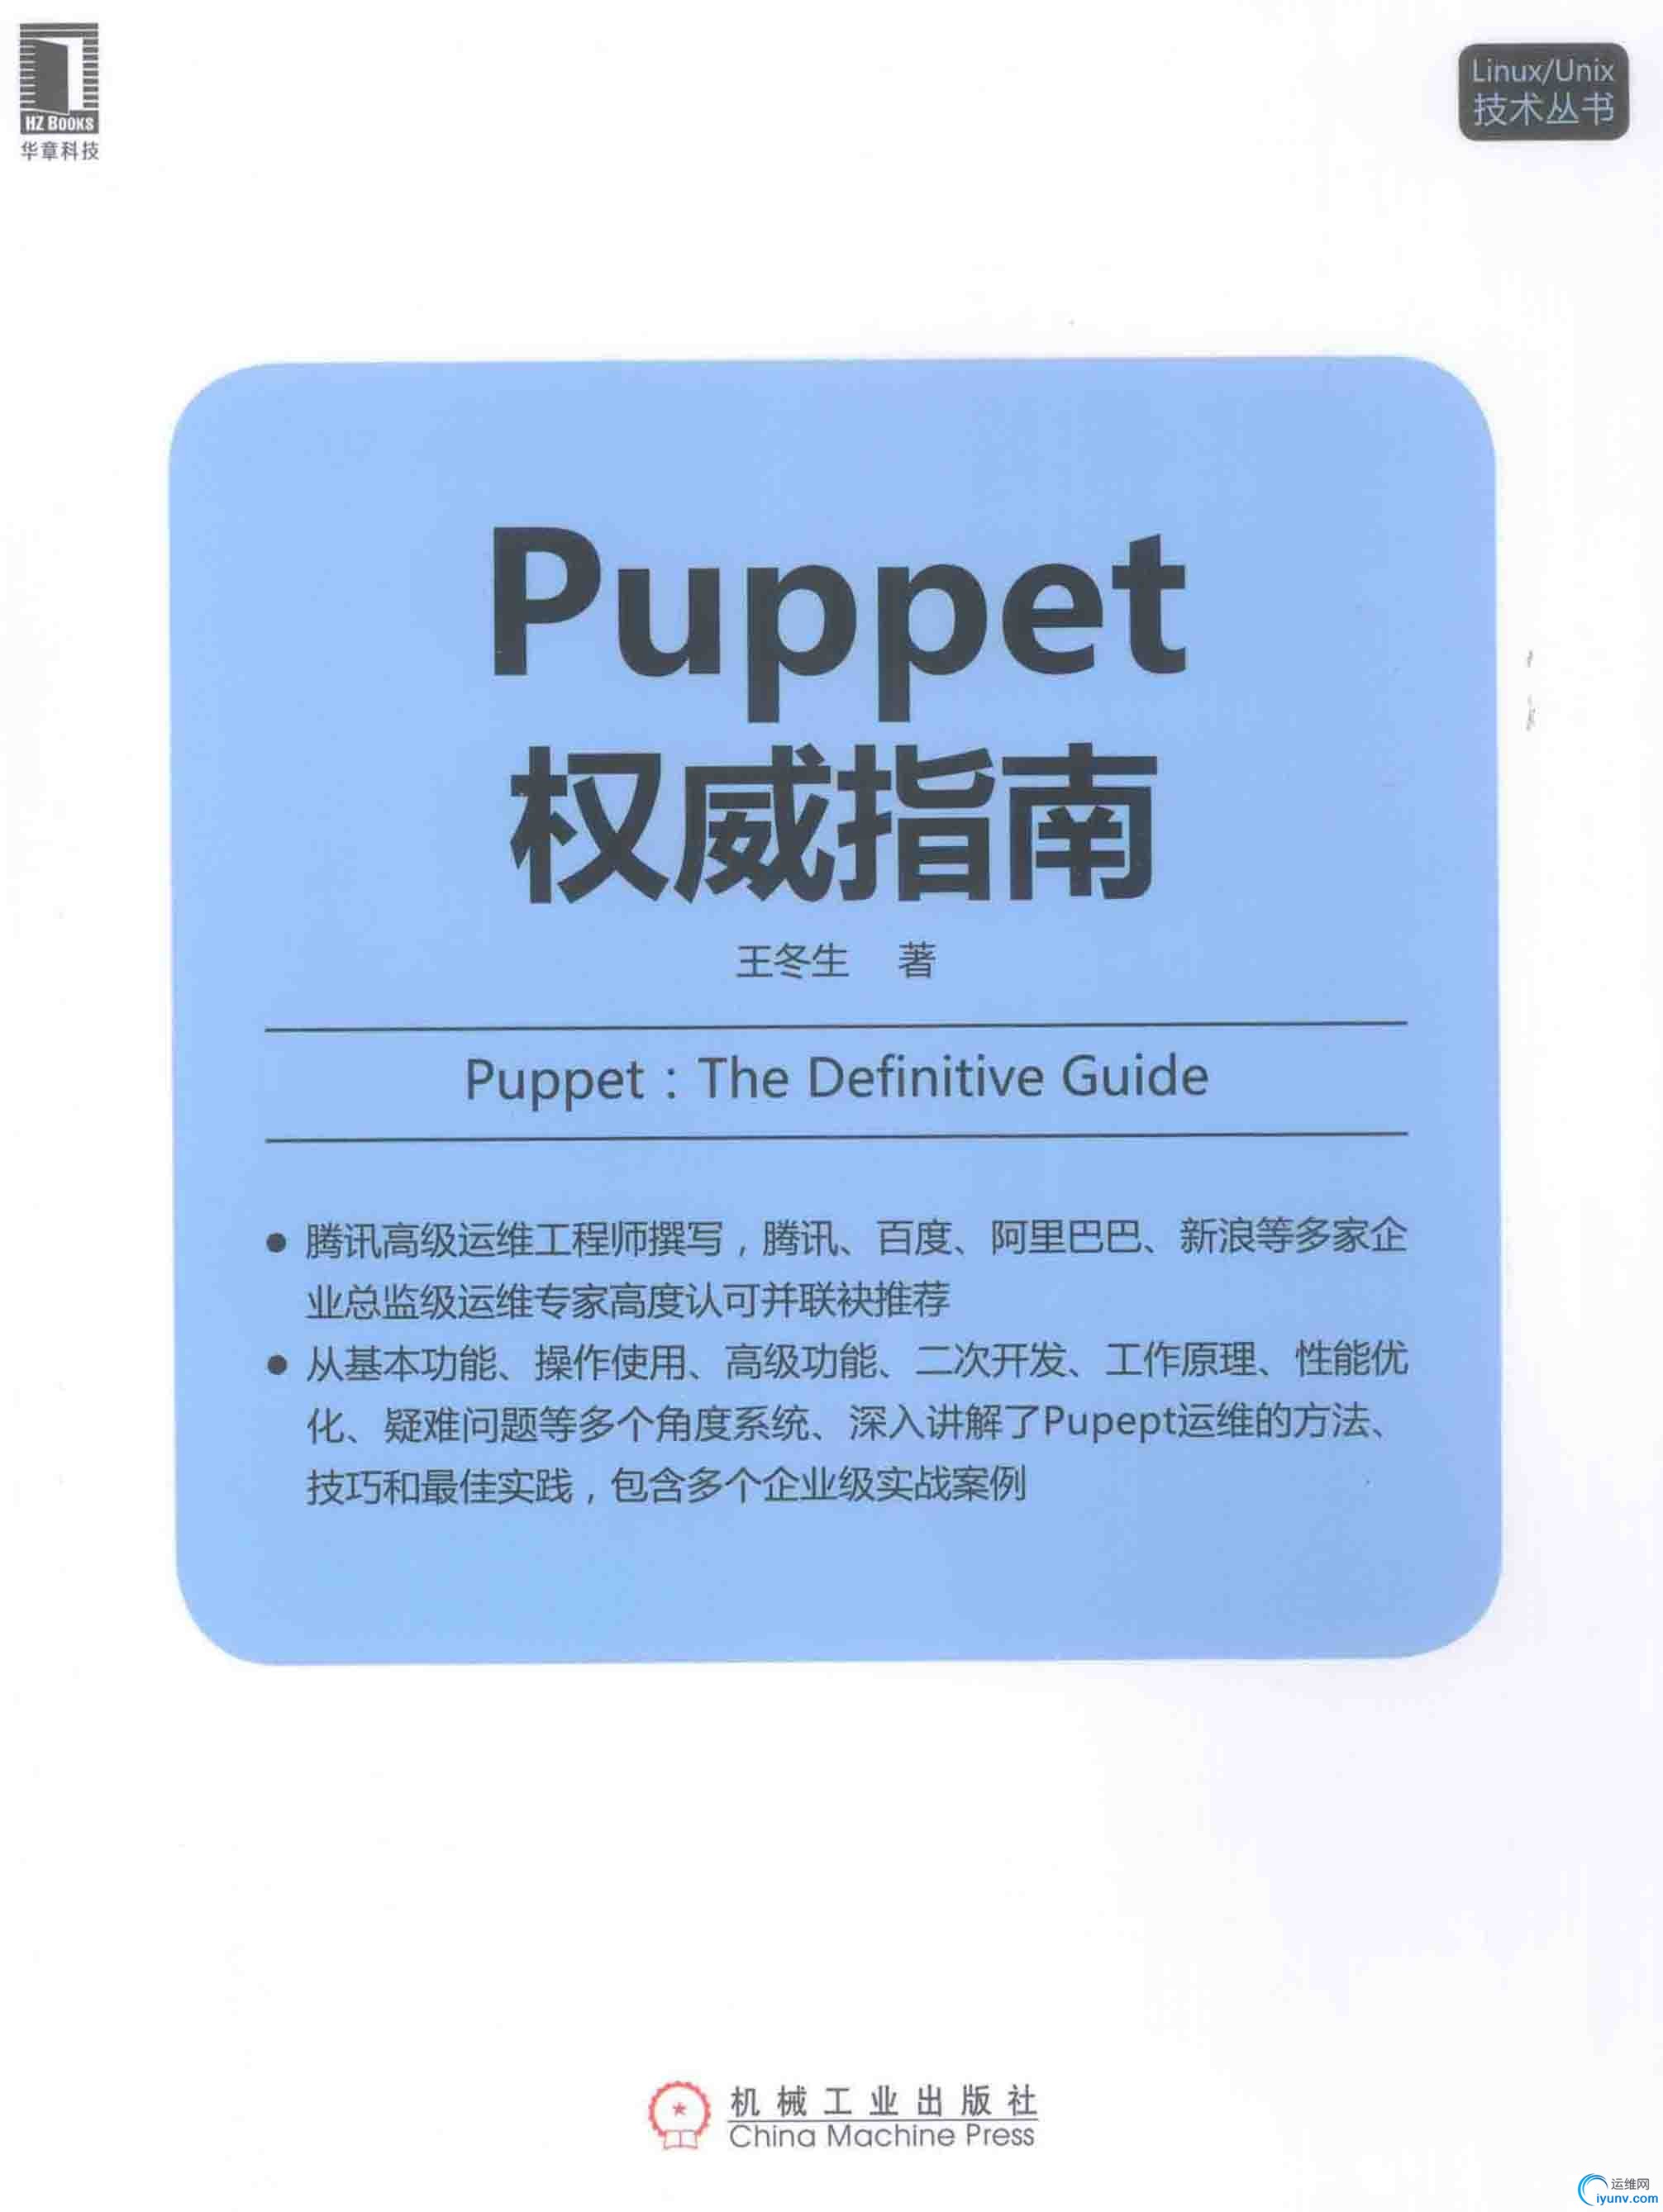 Puppet权威指南 PDF电子书下载 带书签目录 完整版.jpg